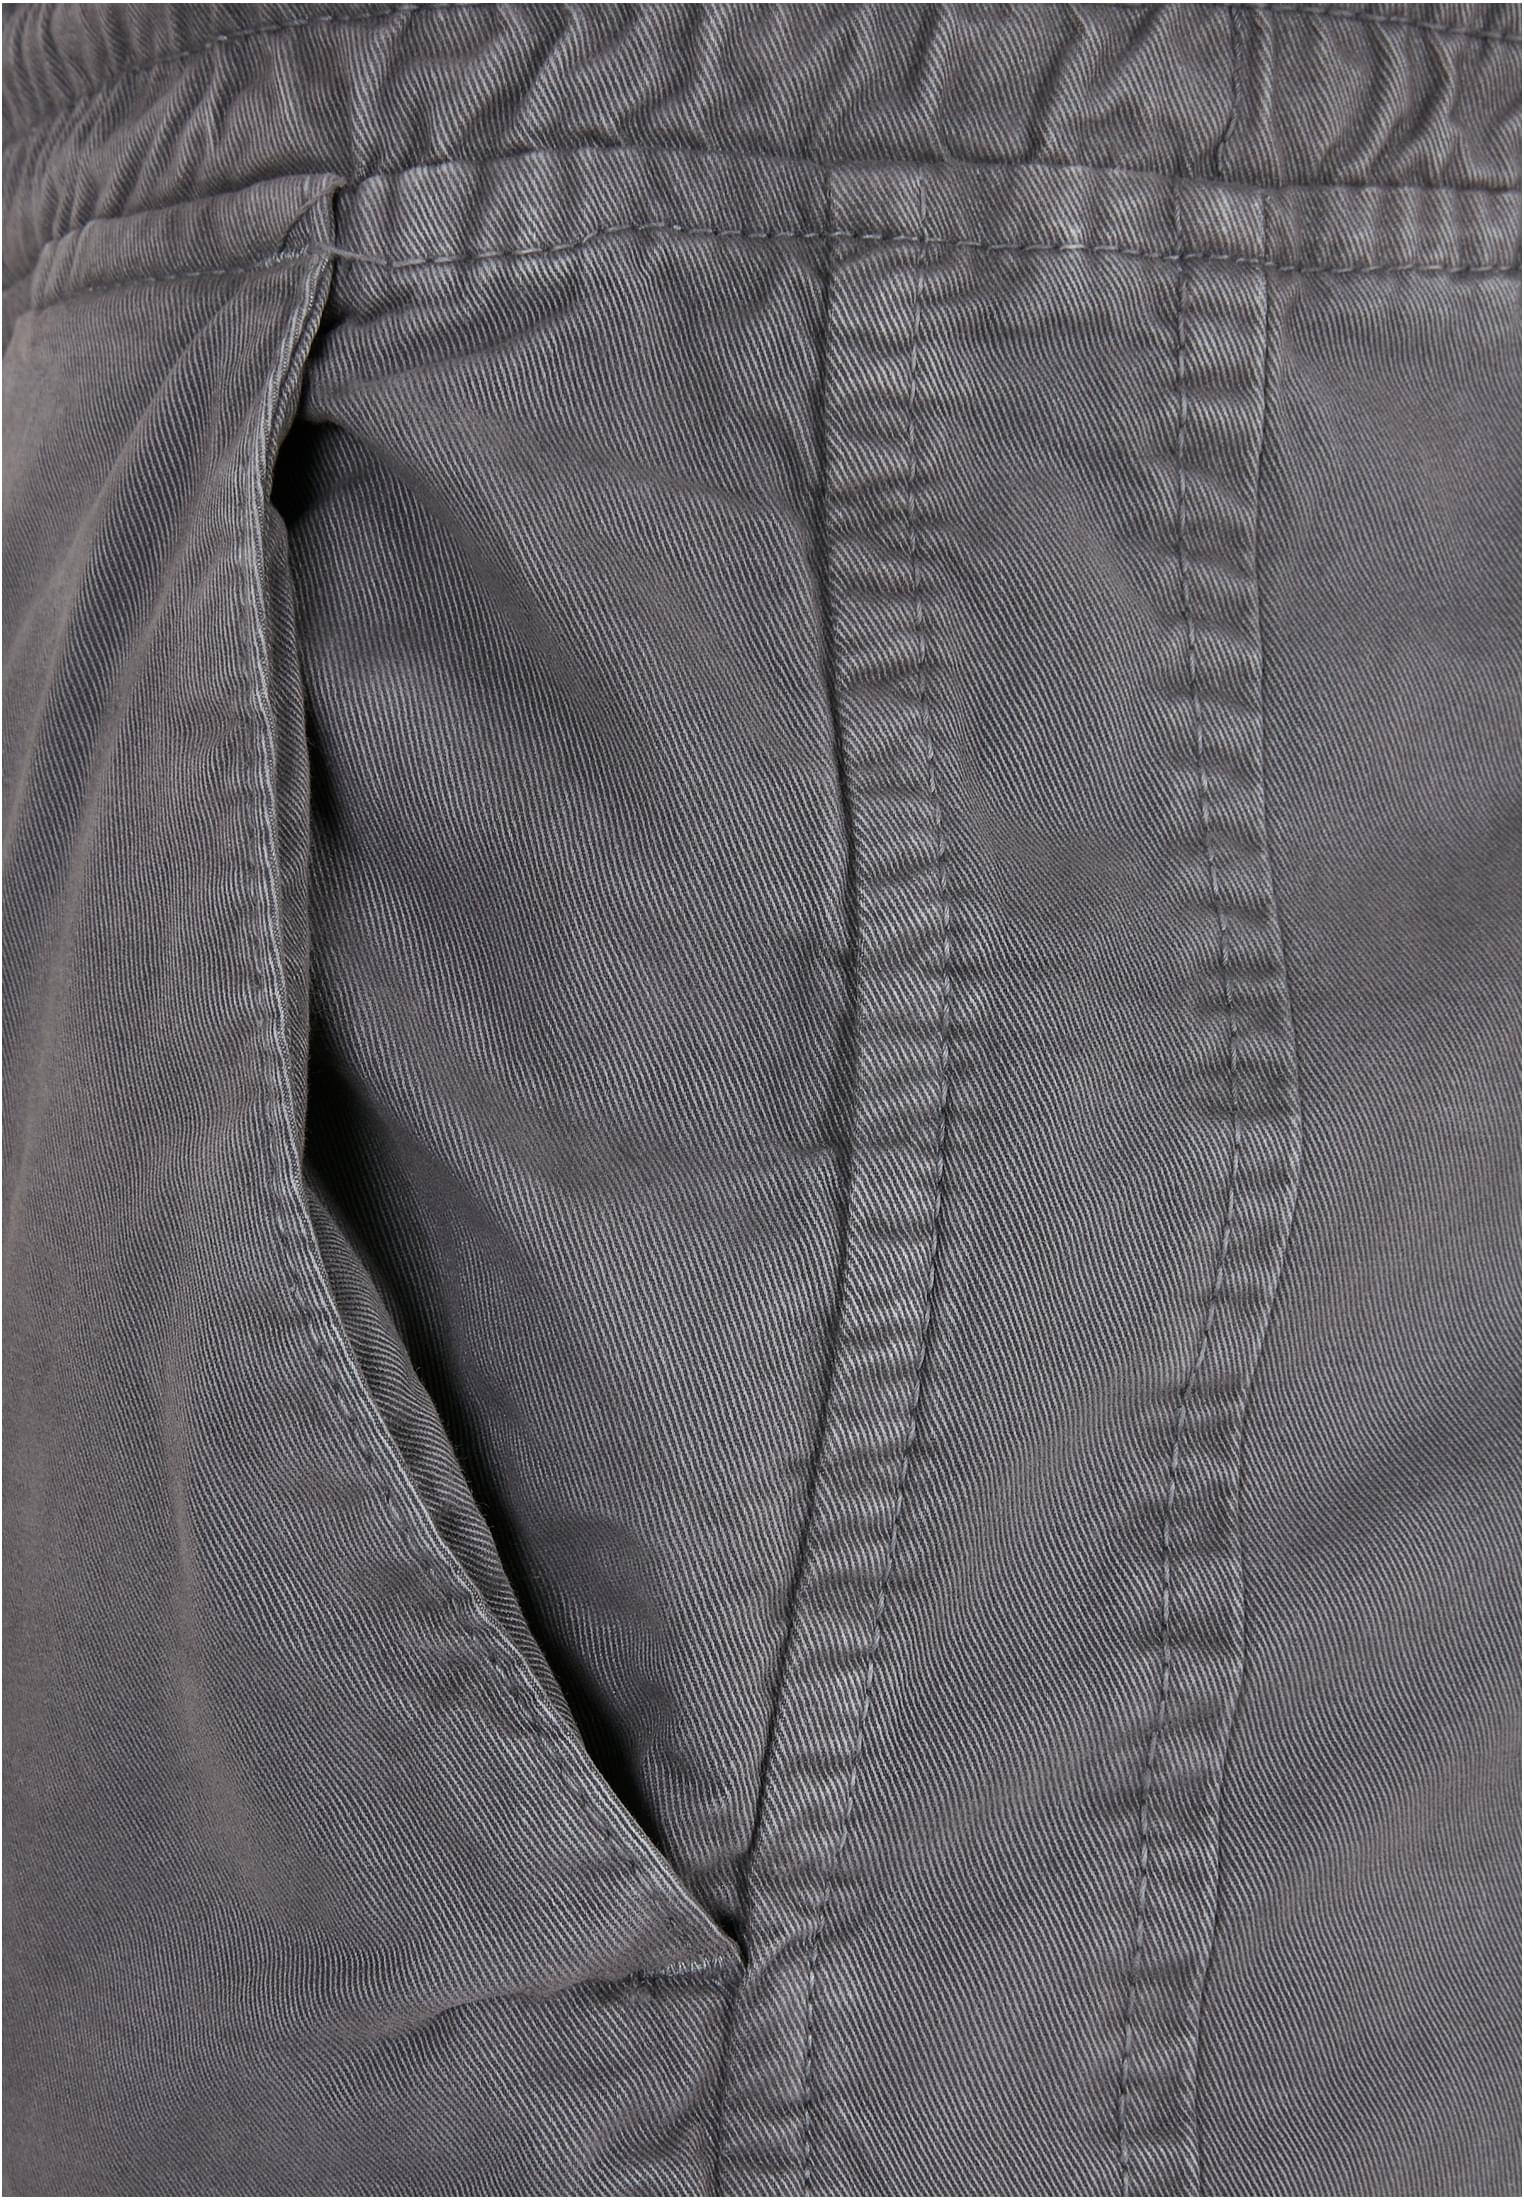 Sweatpants Military Jogg Pants in Farbe darkshadow